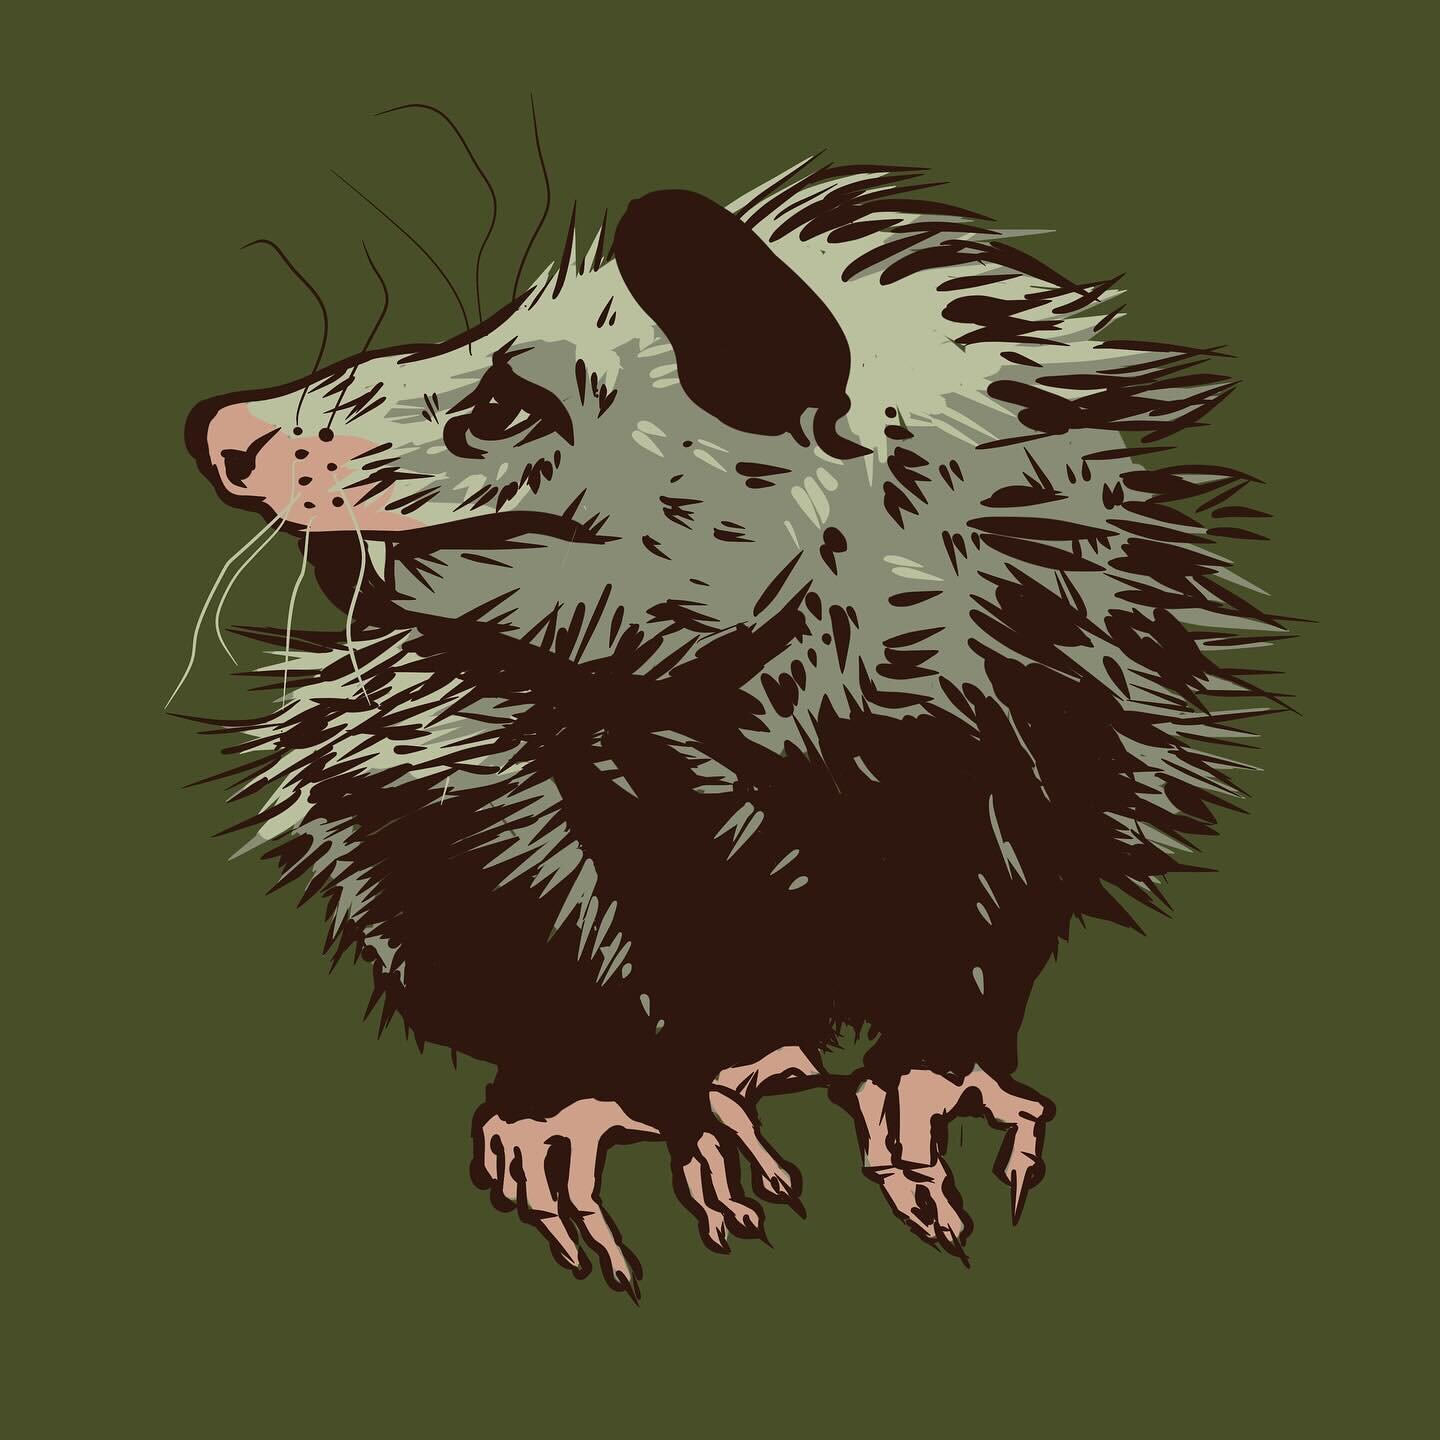 Midsized Opossum.
.
.
.
.
.
#drawing #animalart #sketch #opossum #pinegrove #midsizedopossum #artwork #art #digitalart #illustration #digitalillustration #josergil #draweveryday #illustrator #designer